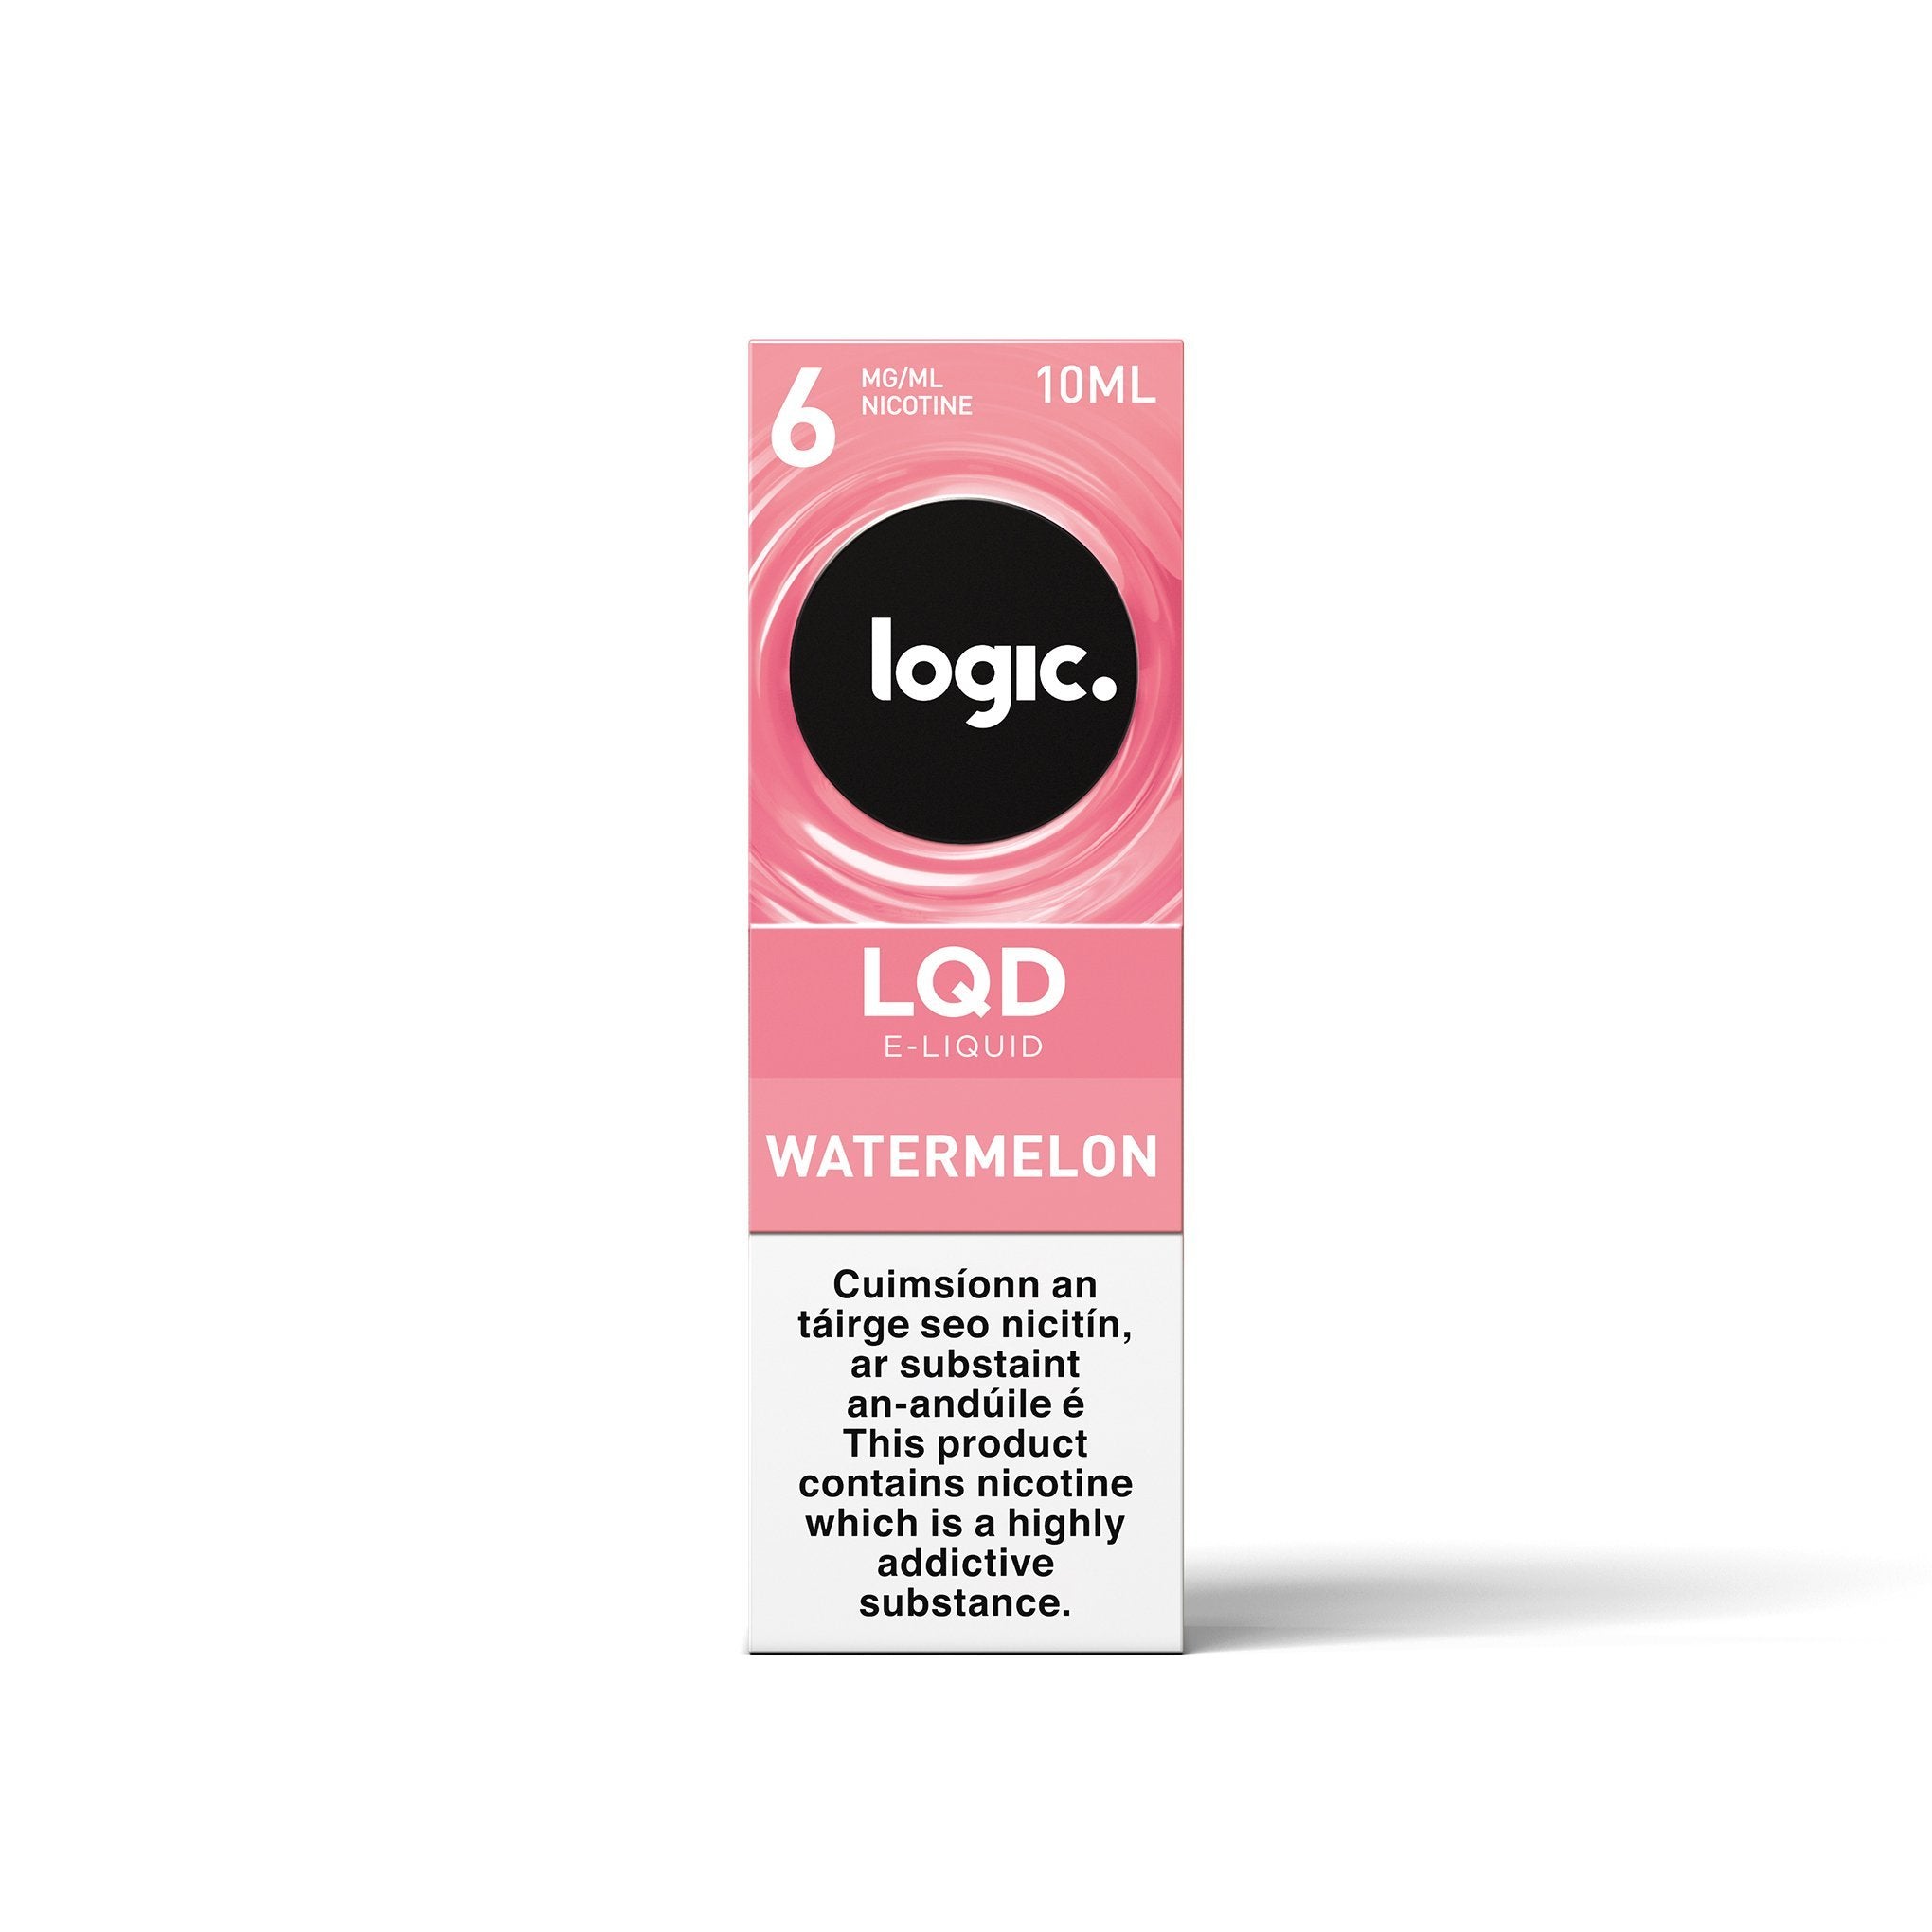 Logic LQD E-Liquid Watermelon 6MG- Low Nicotine